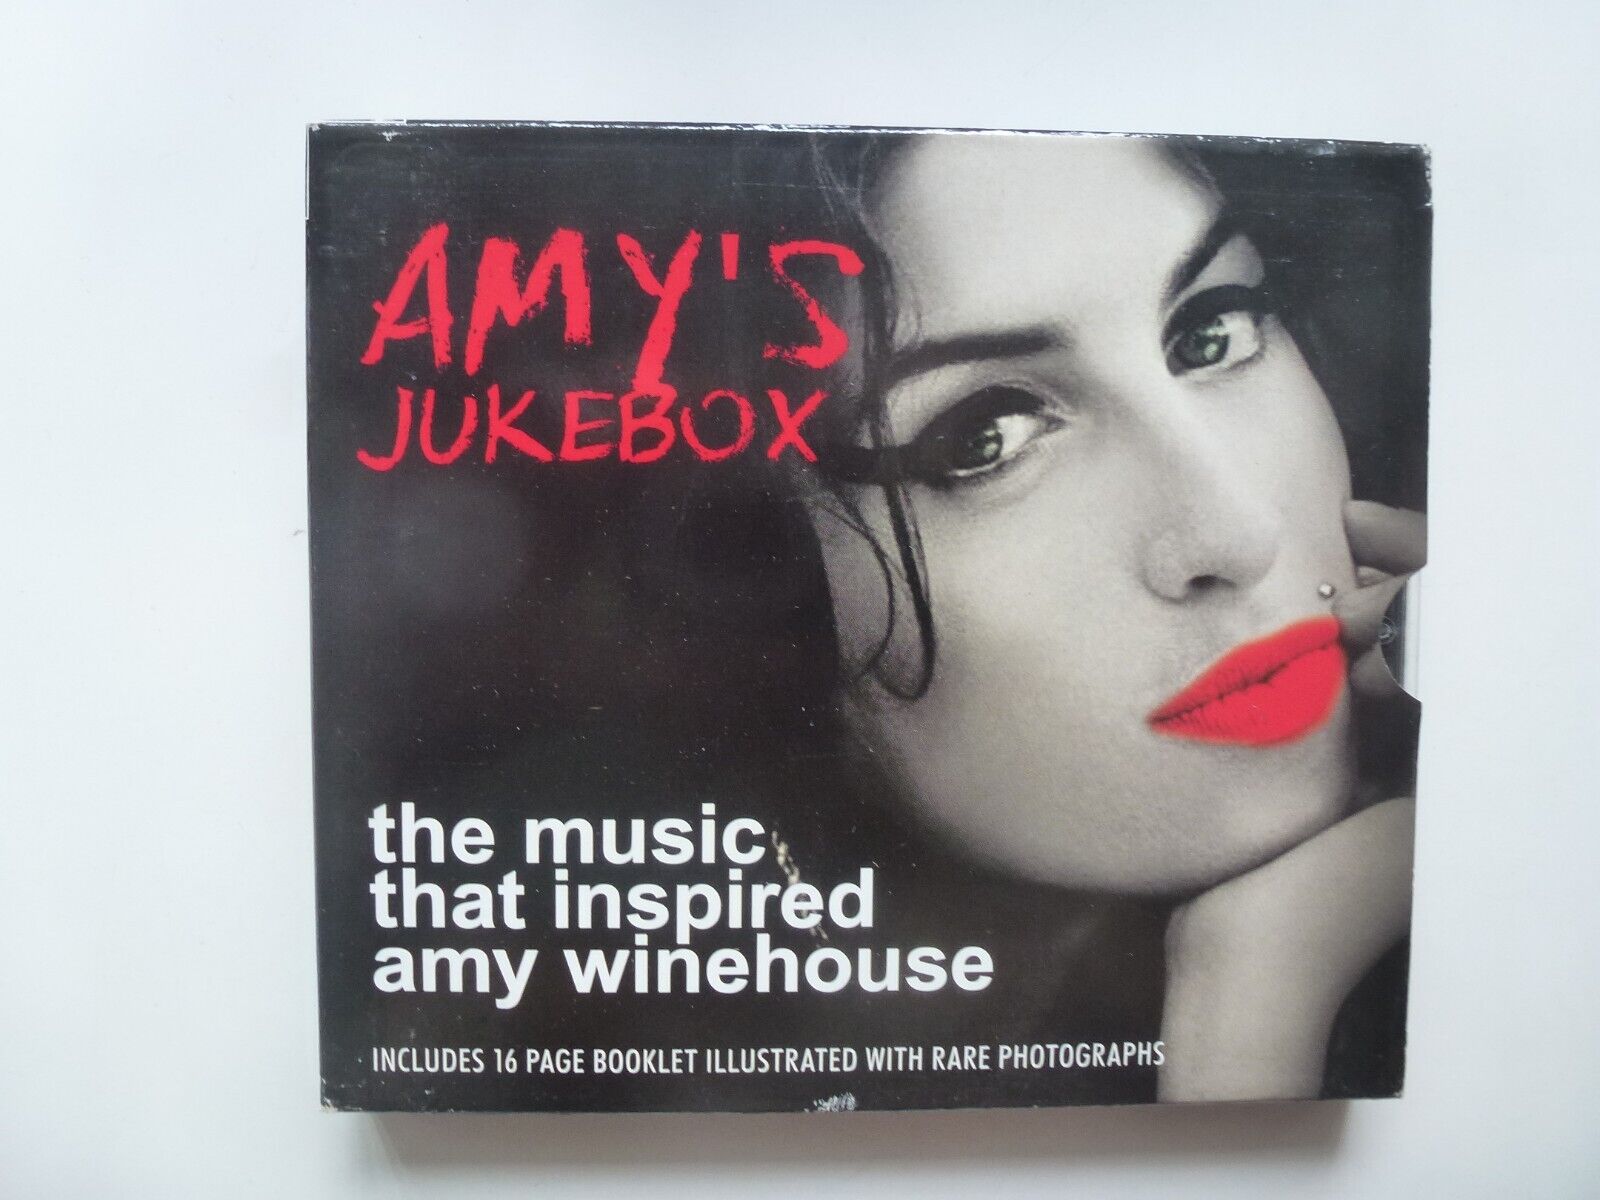 AMY WINEHOUSE - AMY S JUKEBOX/MUSIC THAT INSPIRED AMY WINEHOUSE NEW CD 2011 UK